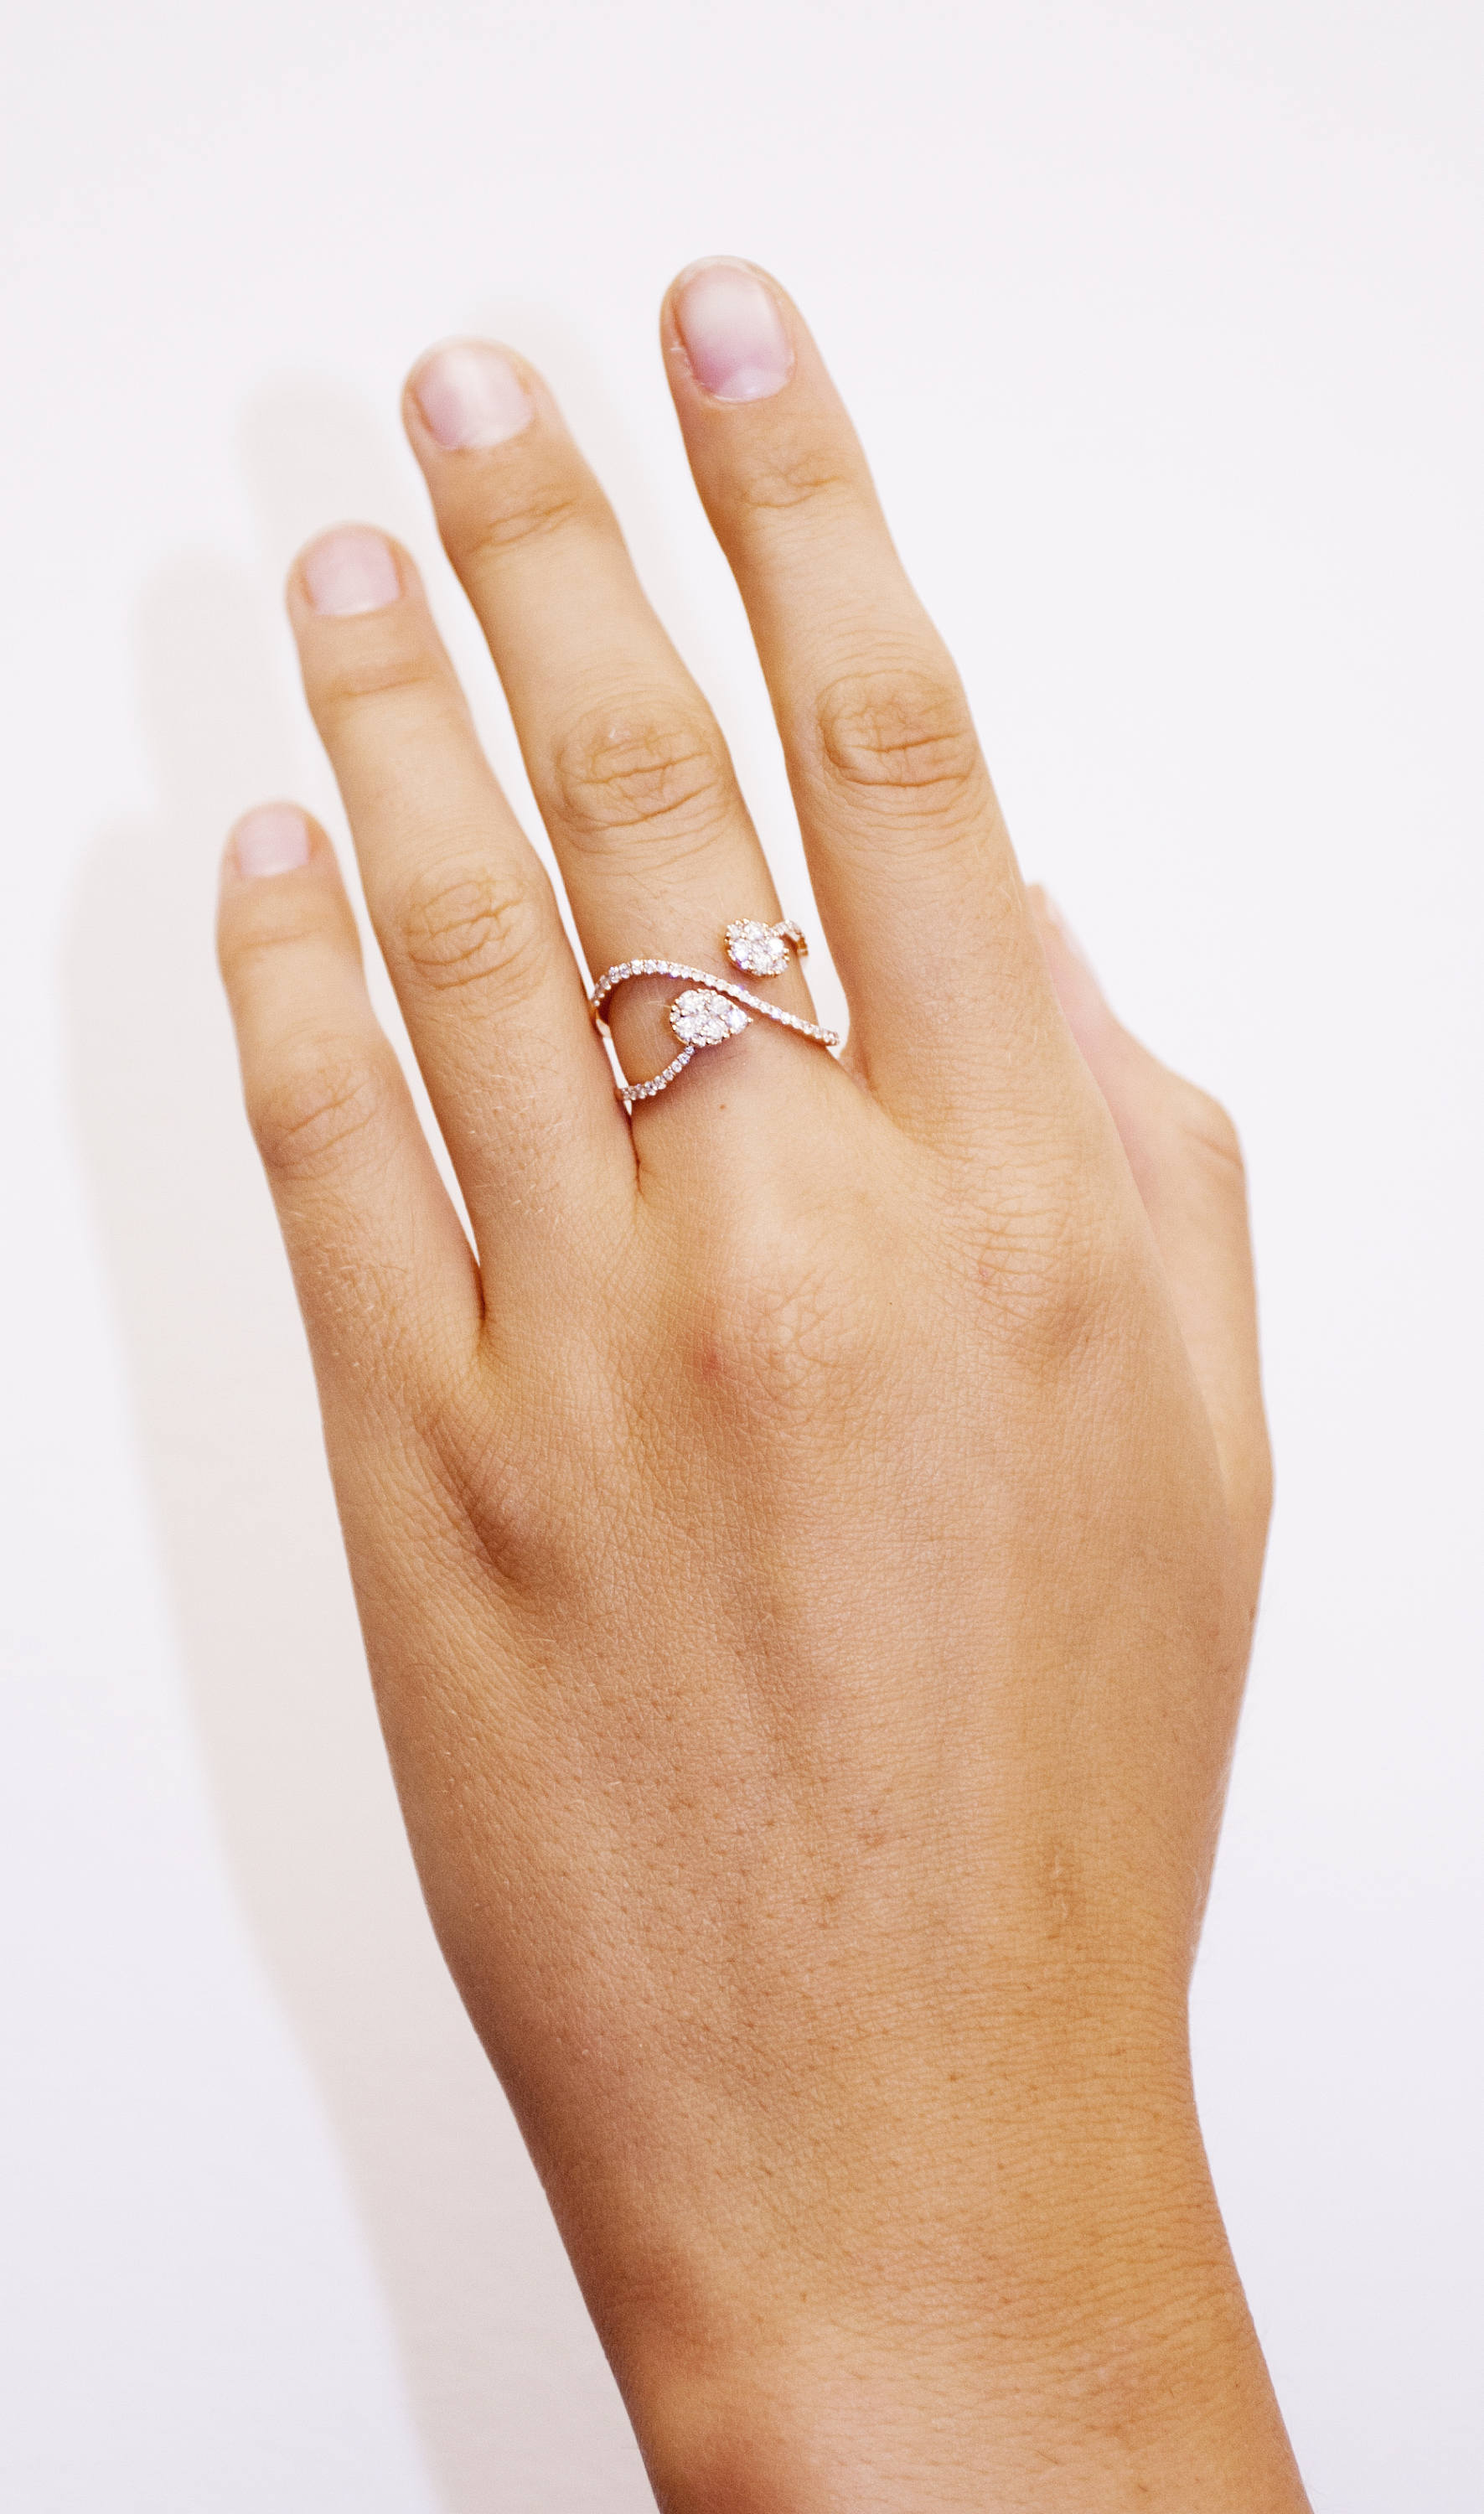 Premium Photo | Golden infinity wedding ring for engagement